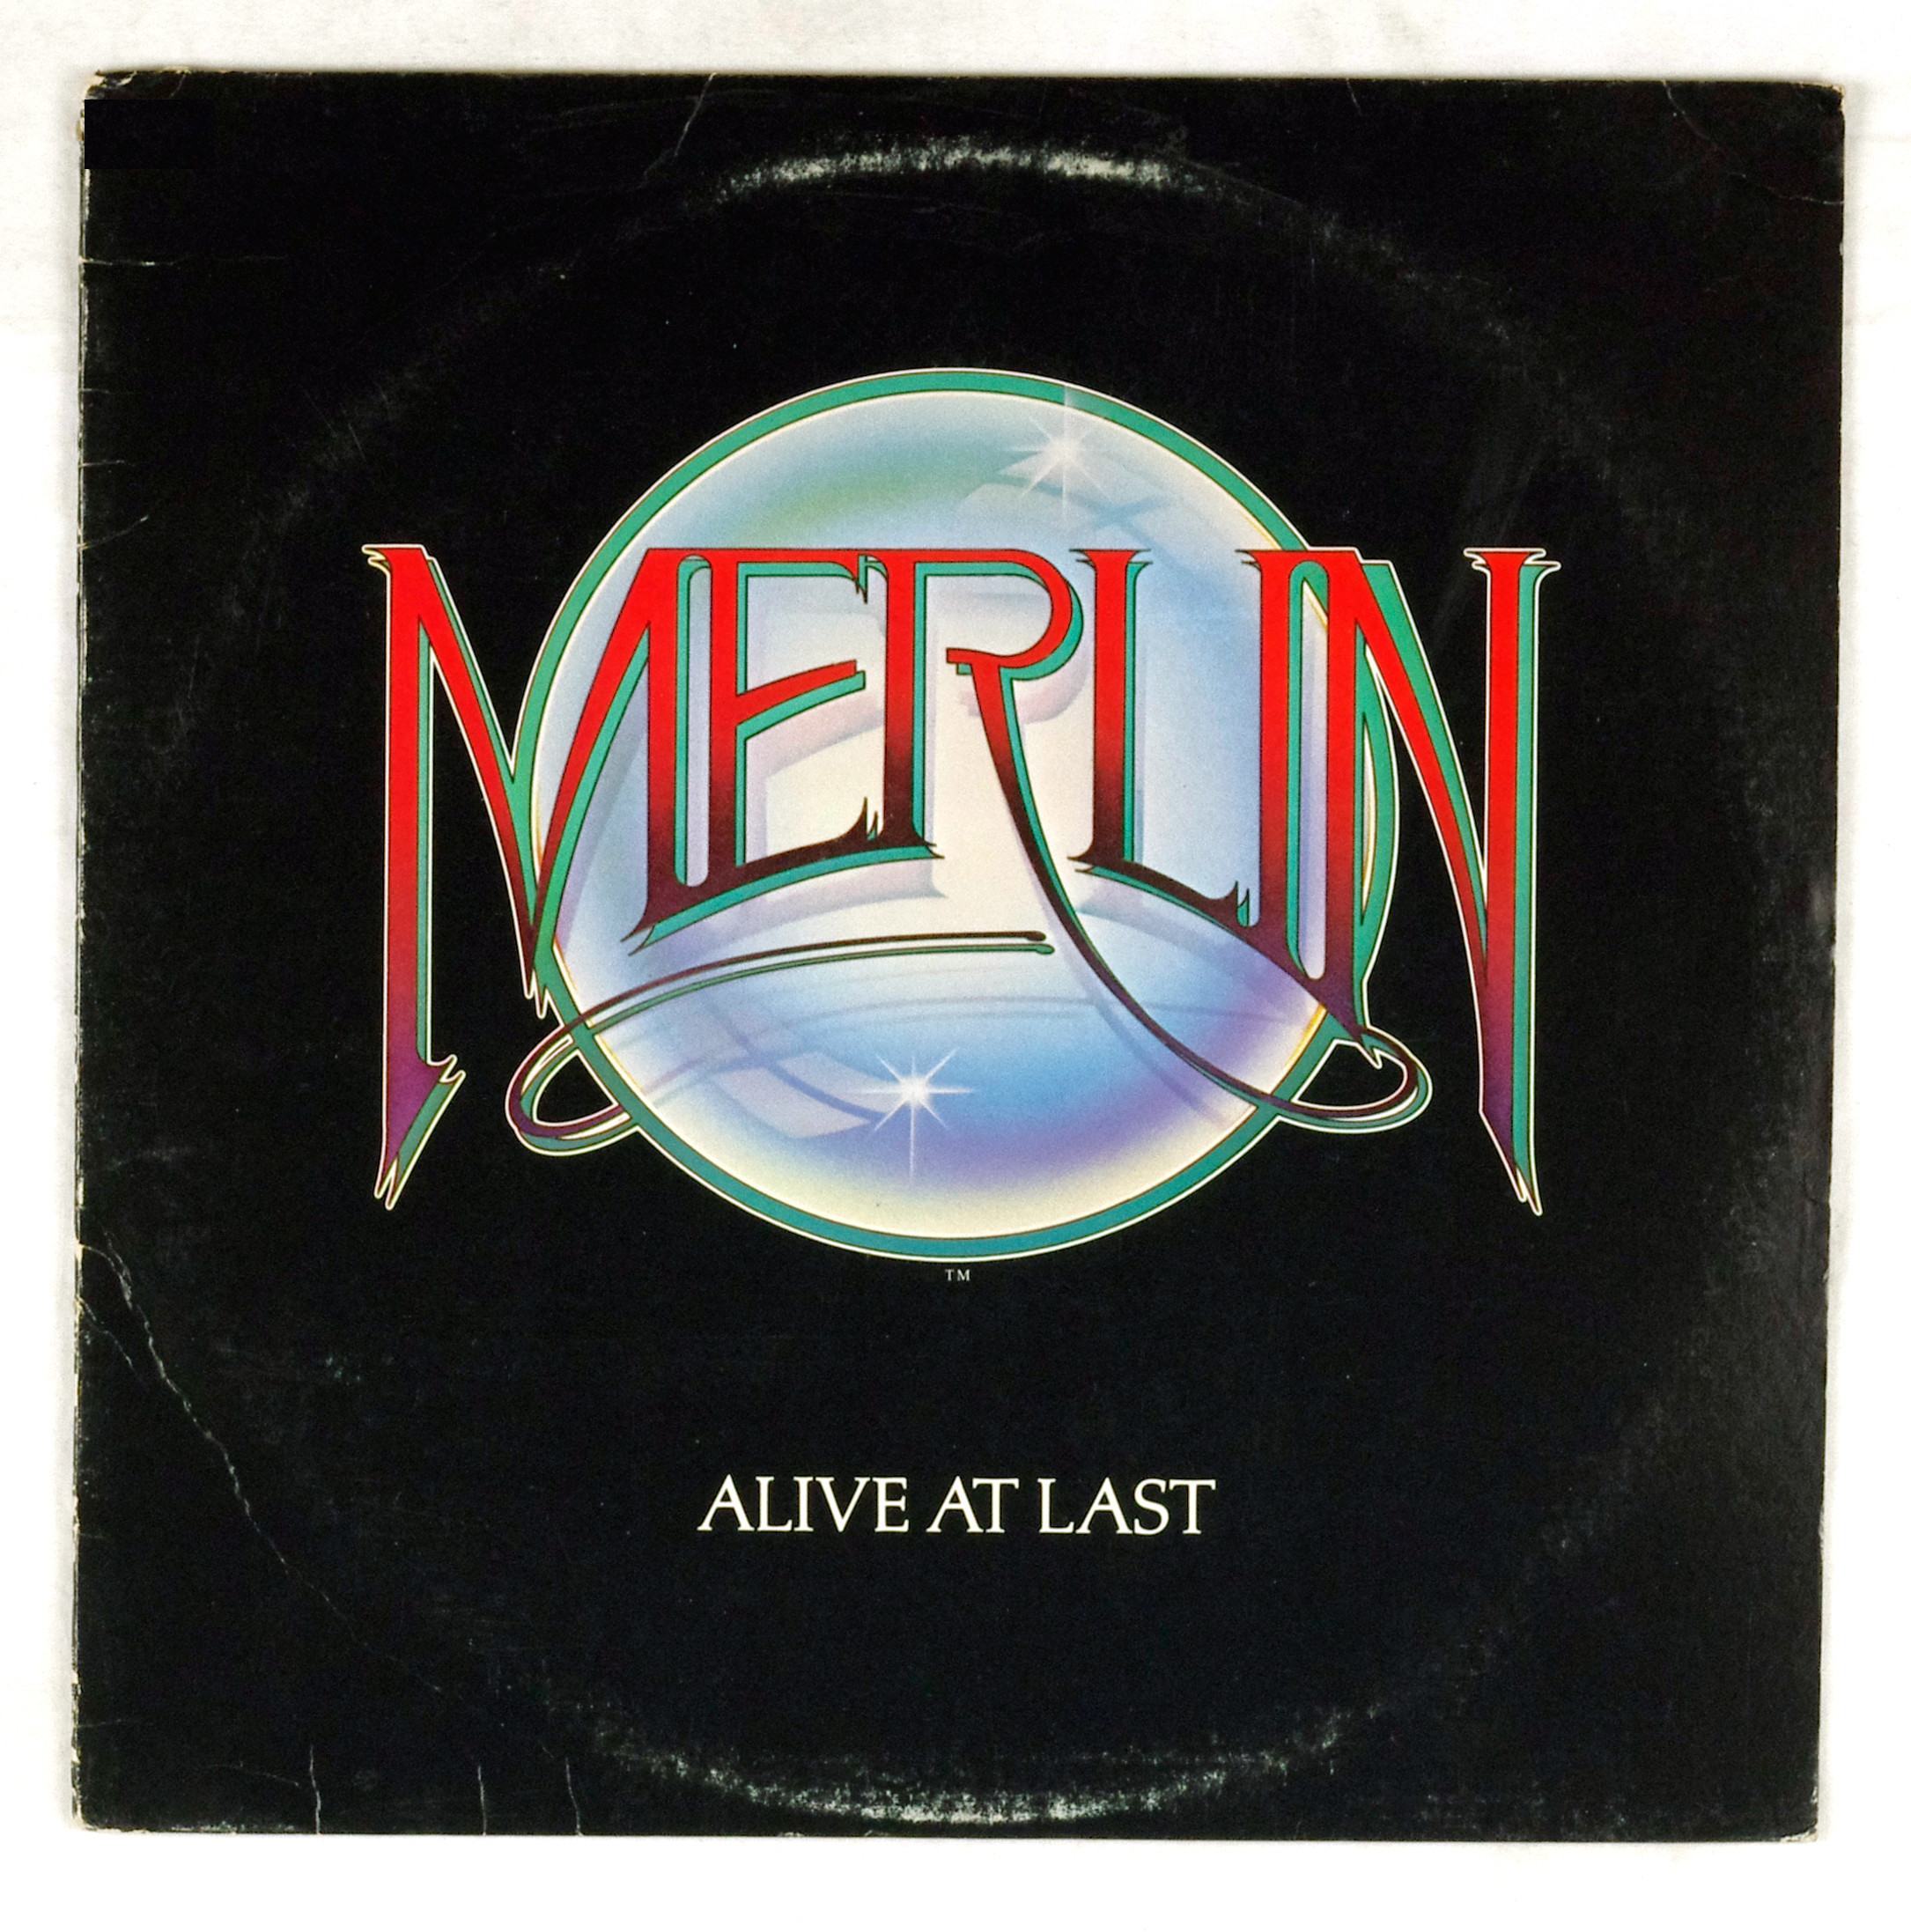 Merlin Vinyl Alive At Last 1981